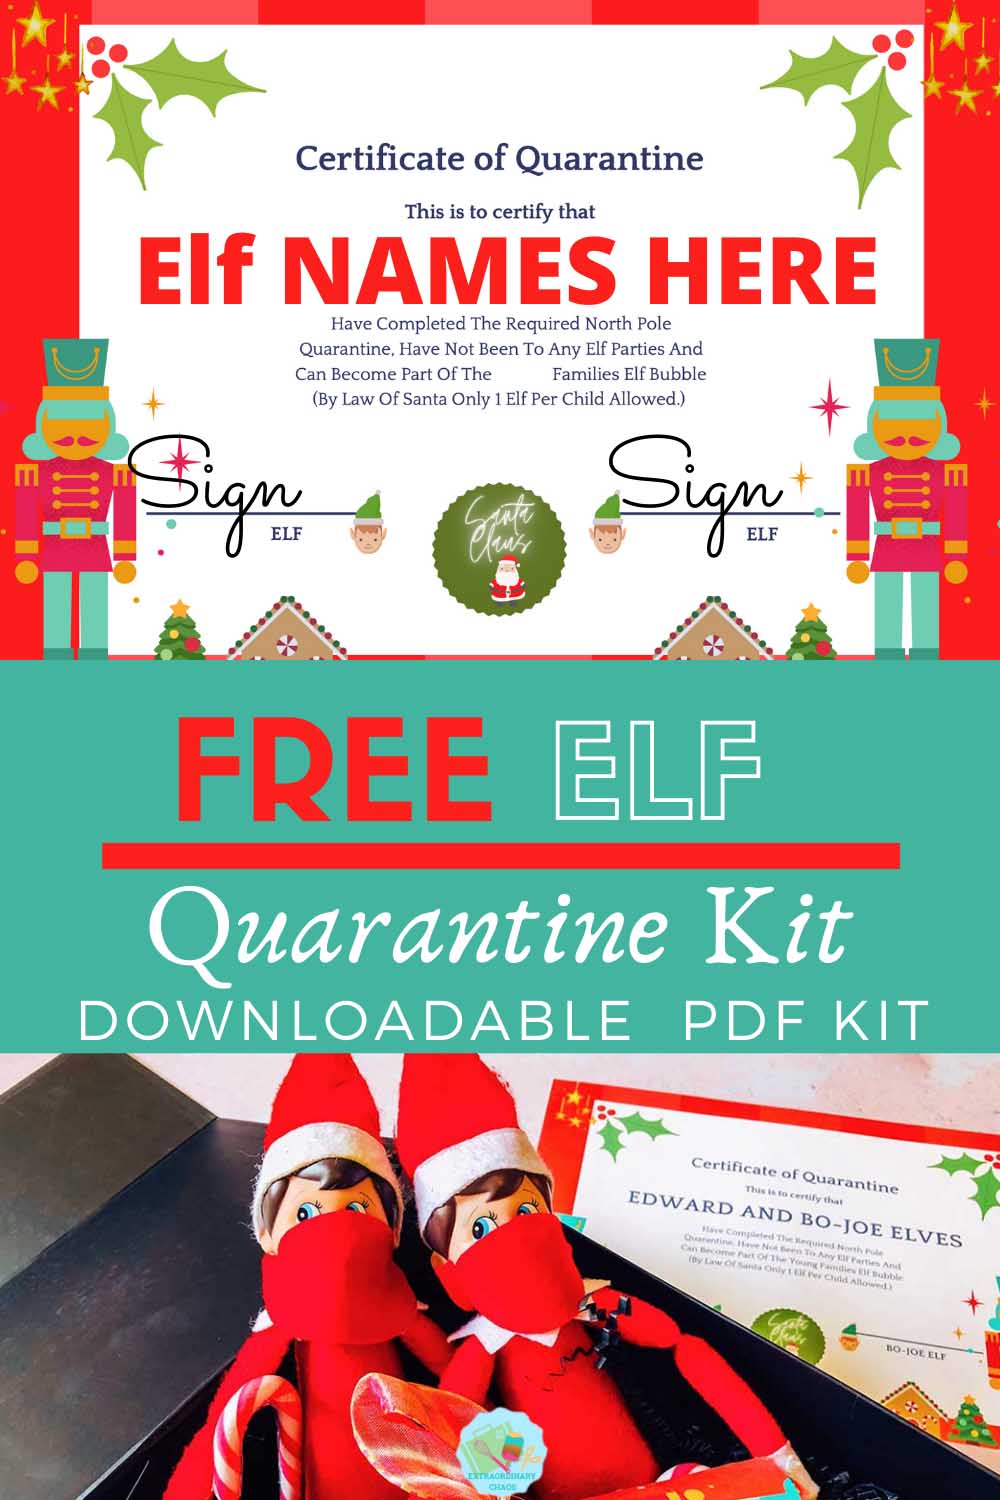 Free Downloadable Elf on the shelf quarantine kit and Elf Quarantine Certificate